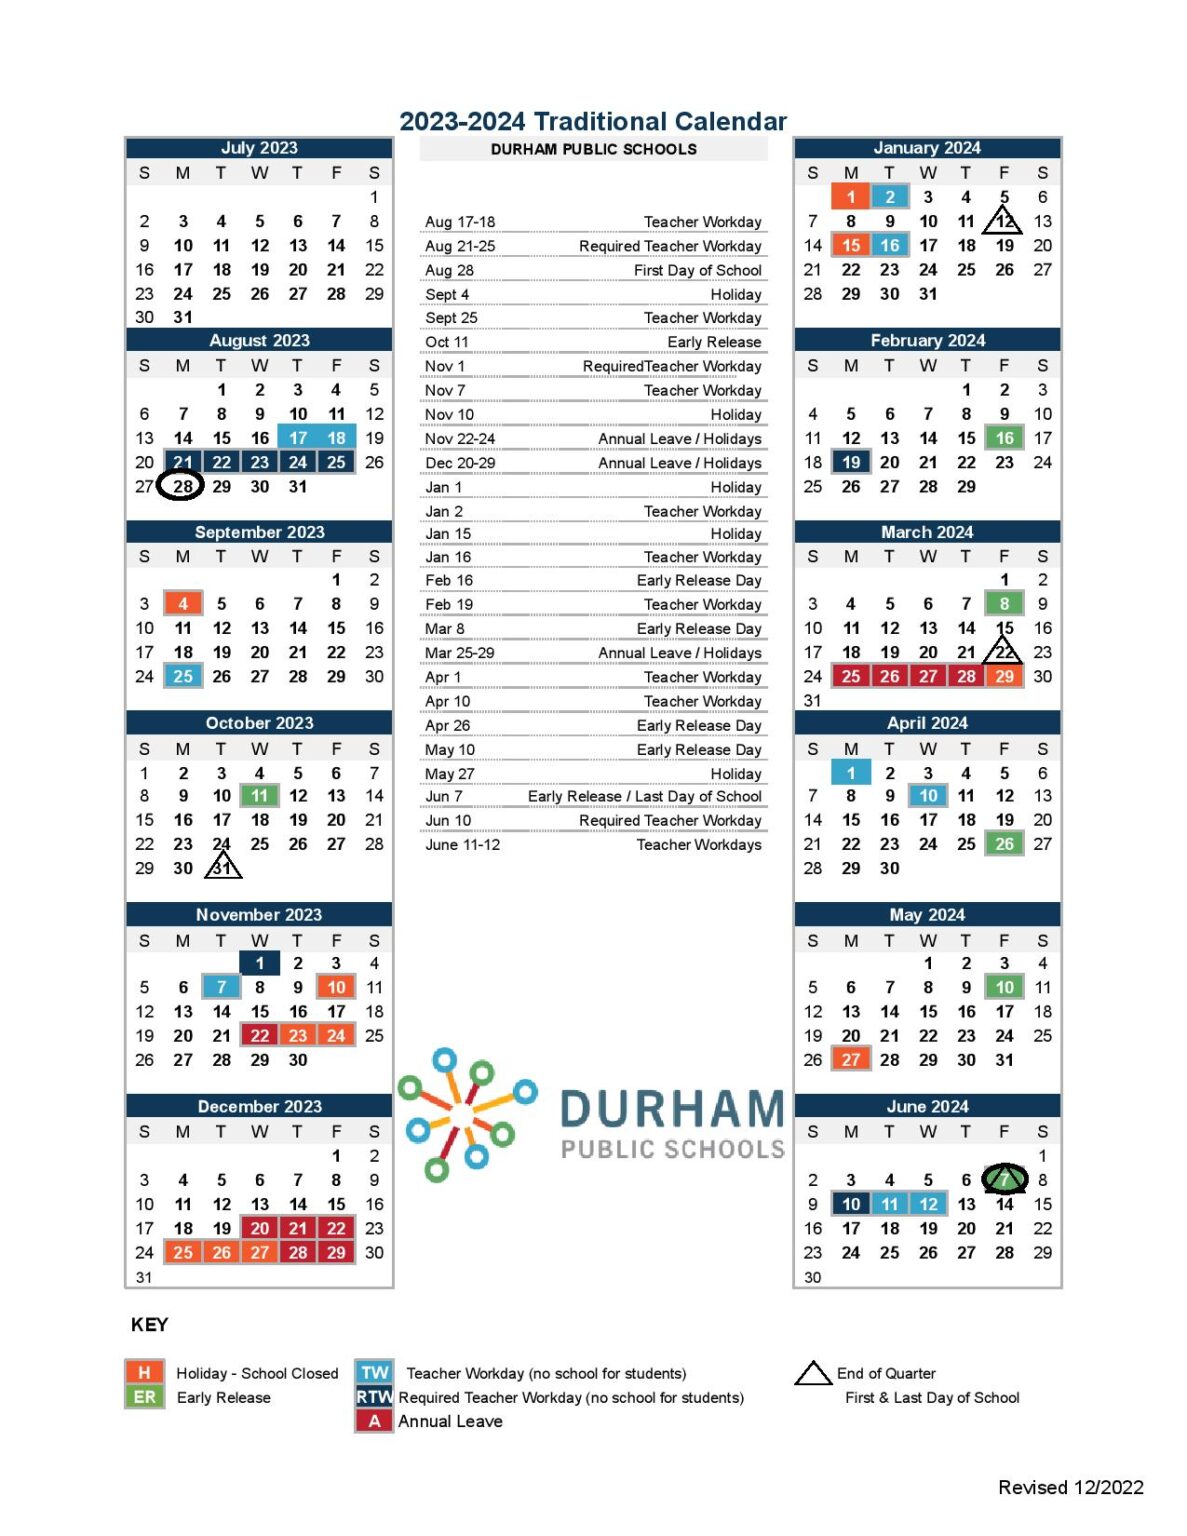 durham-public-schools-calendar-2023-2024-holiday-breaks